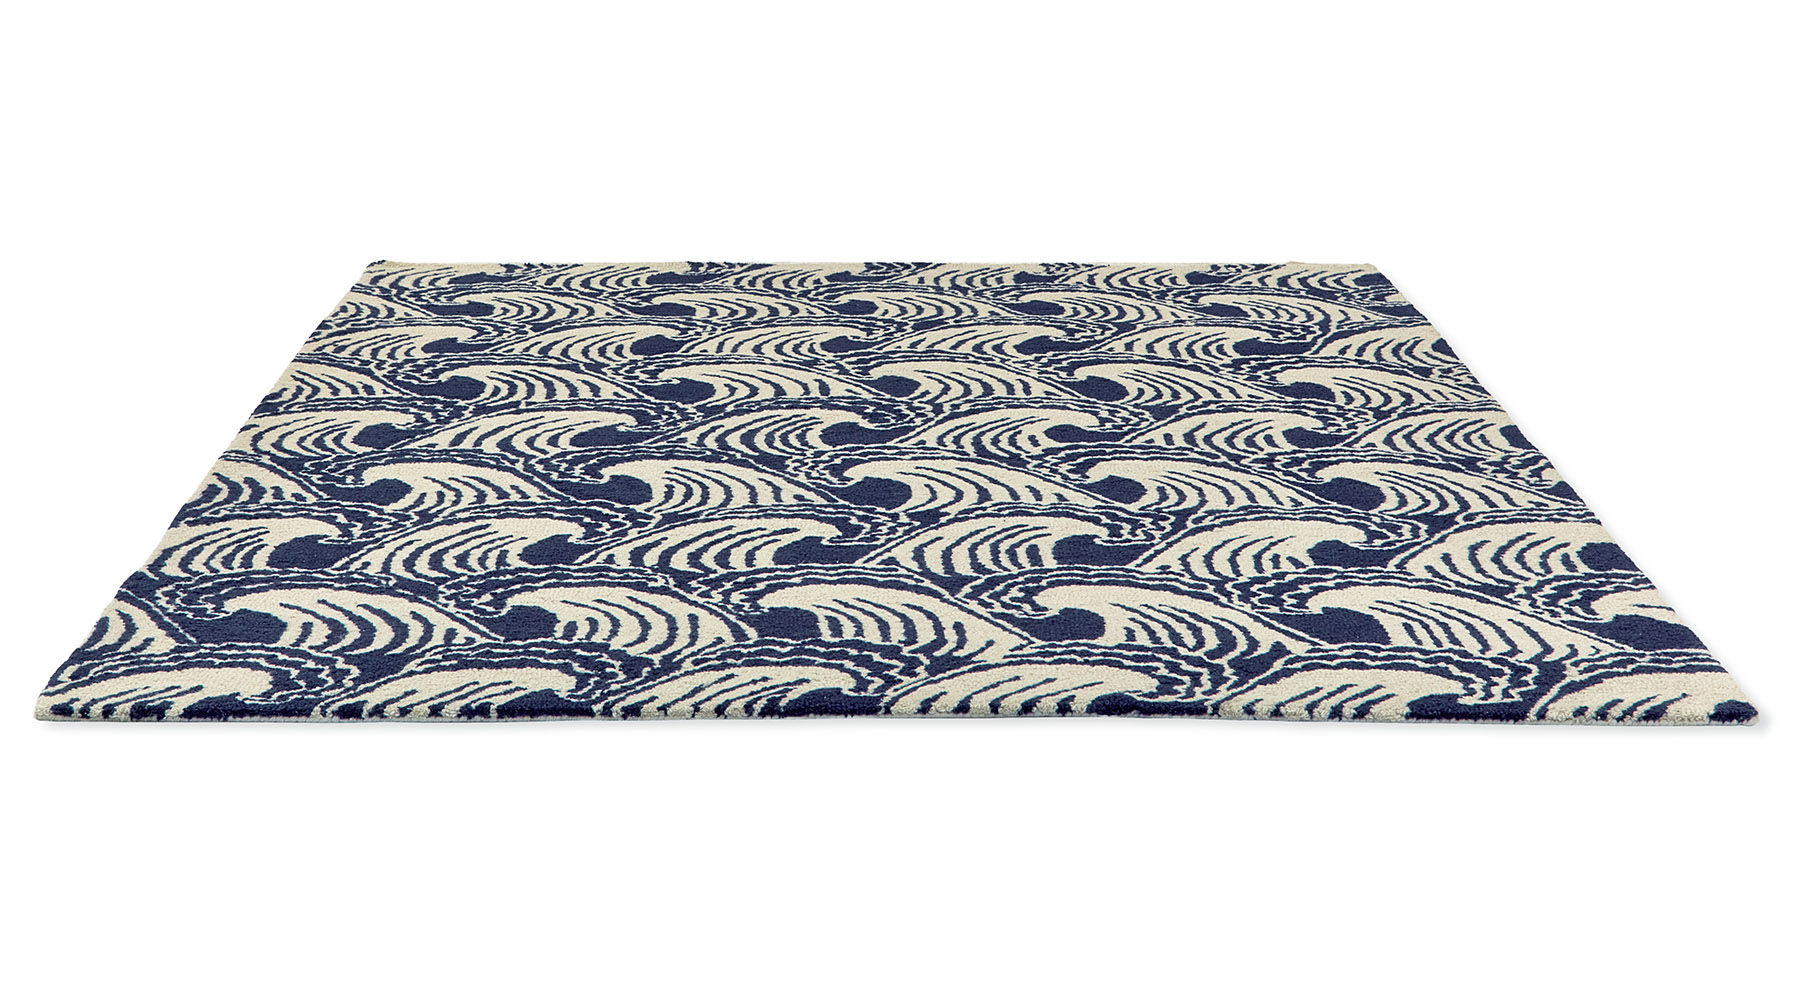 Waves Denim Rug ☞ Size: 6' 7" x 9' 2" (200 x 280 cm)